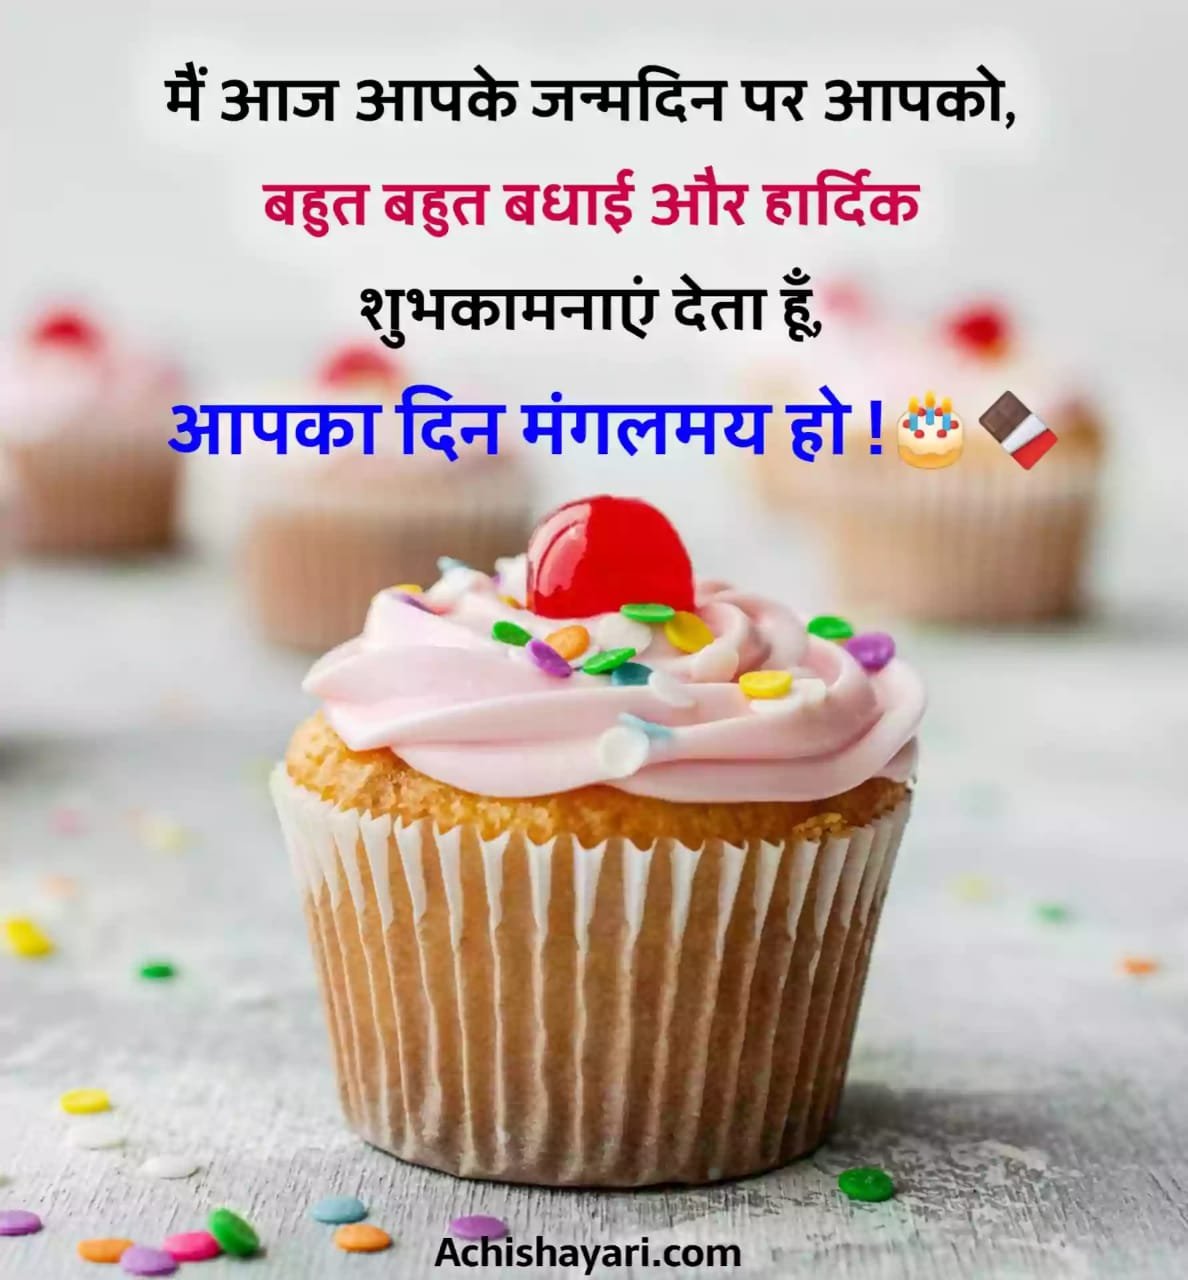 Birthday Wishes in Hindi Shayari Image